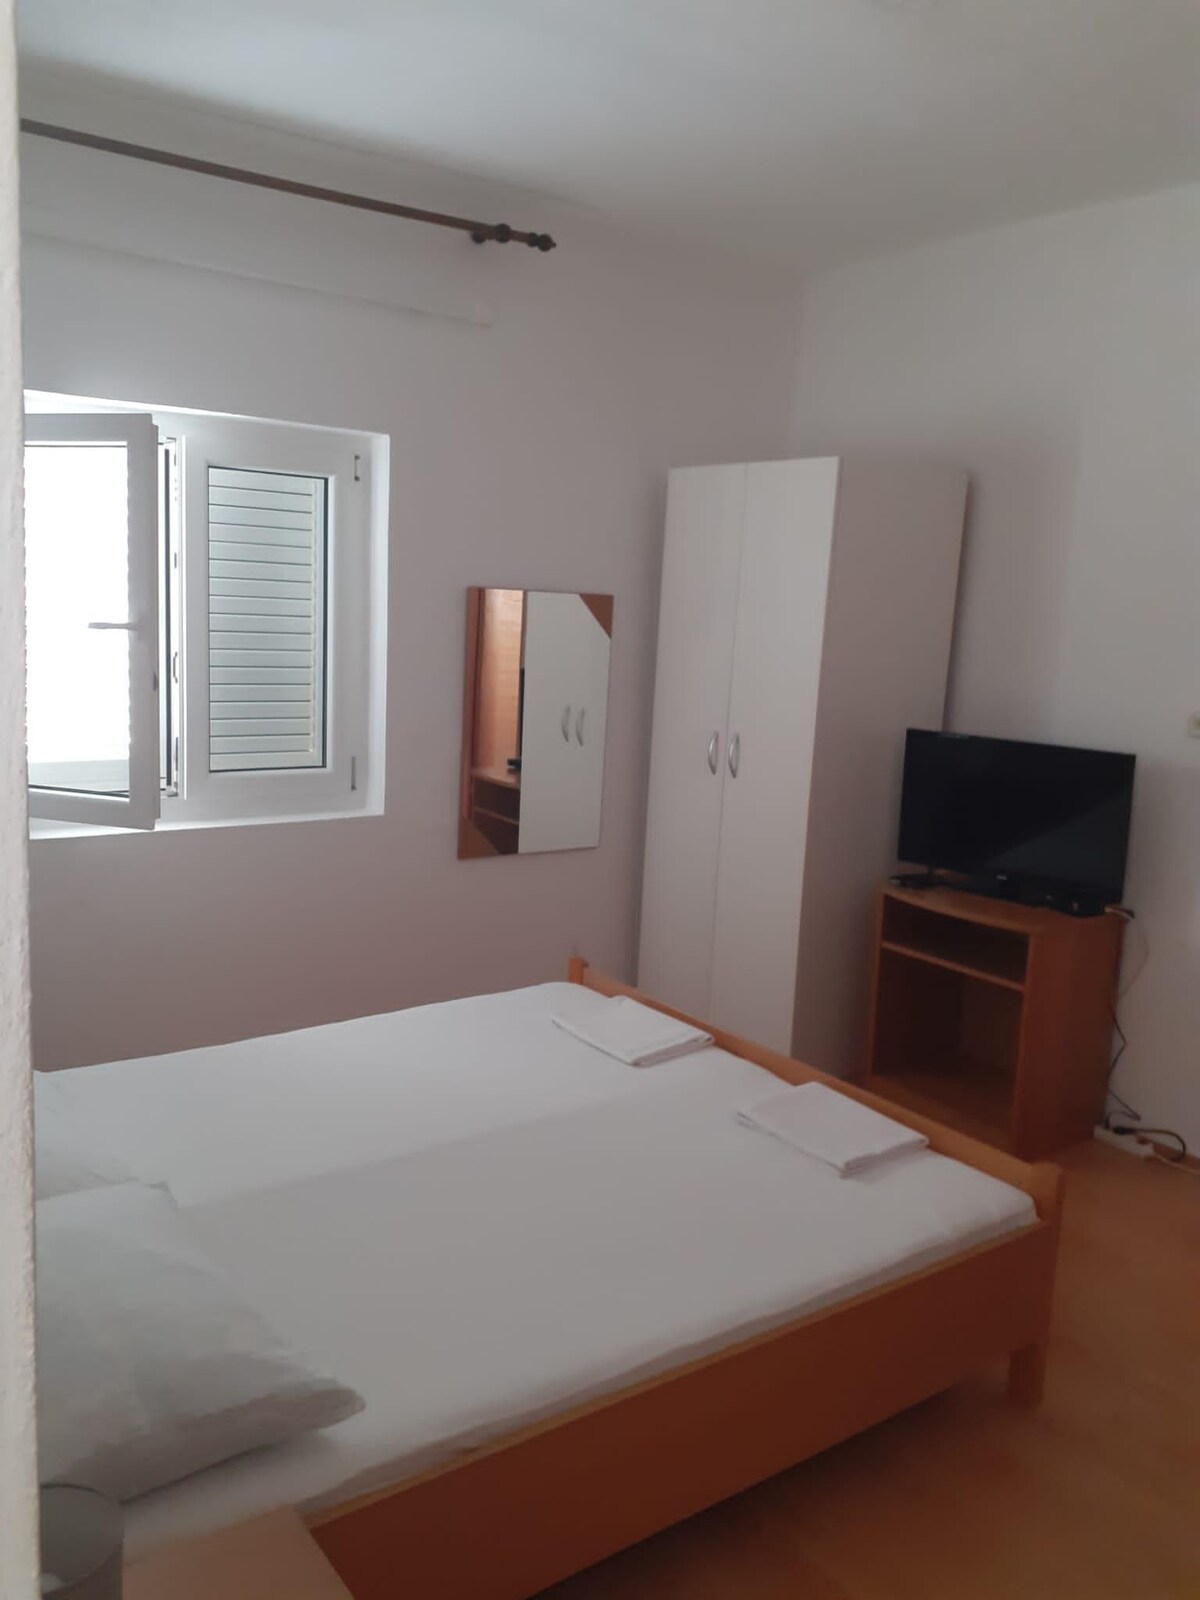 A-6395-d One bedroom apartment near beach Metajna,